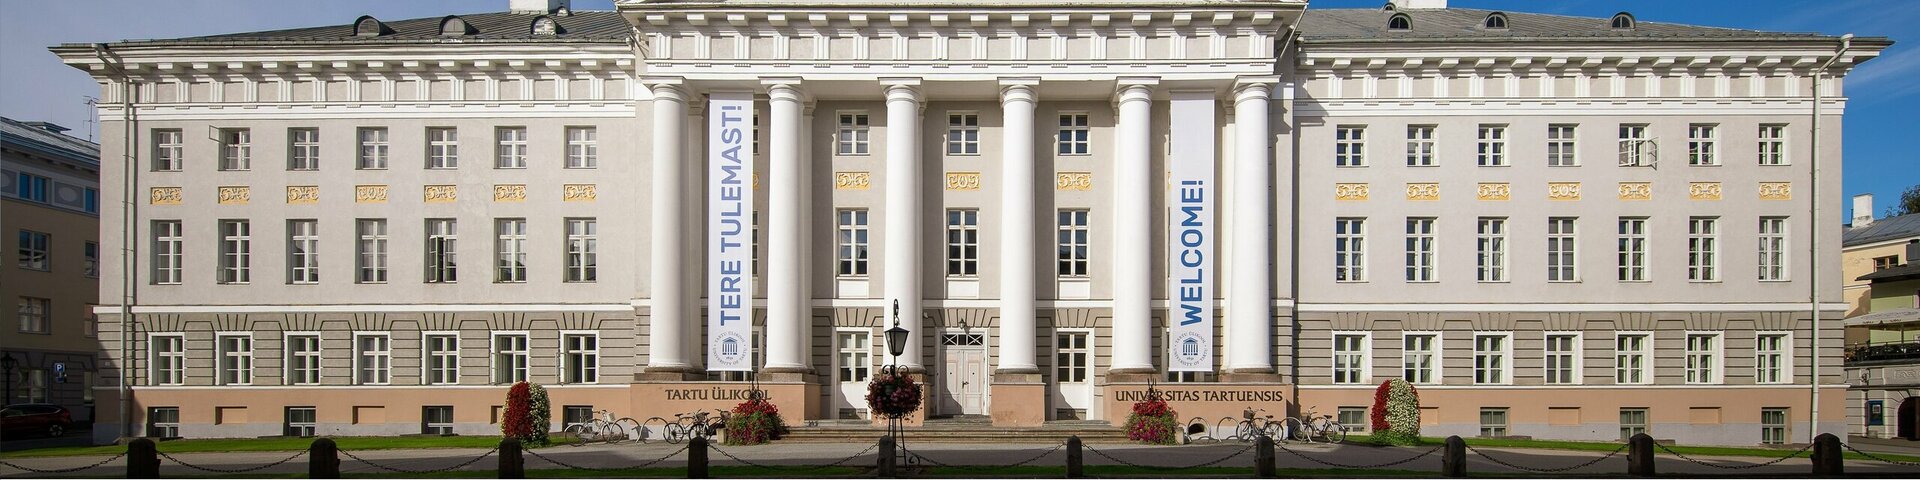 Main building of University of Tartu